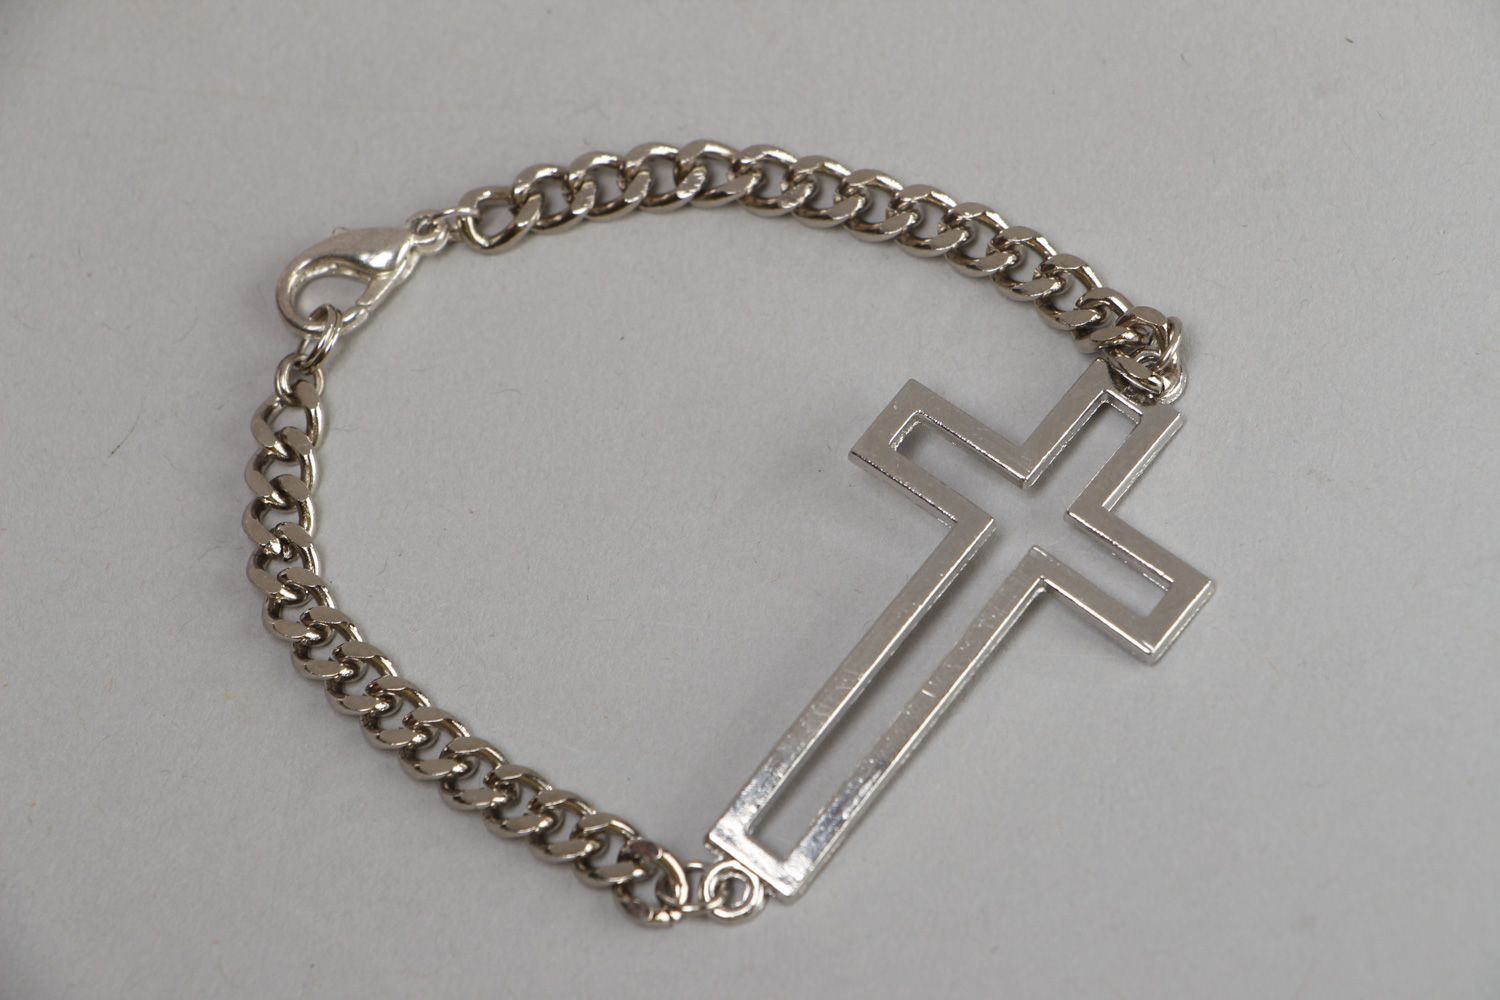 Handmade fashionable metal chain wrist bracelet with cross charm for women photo 1